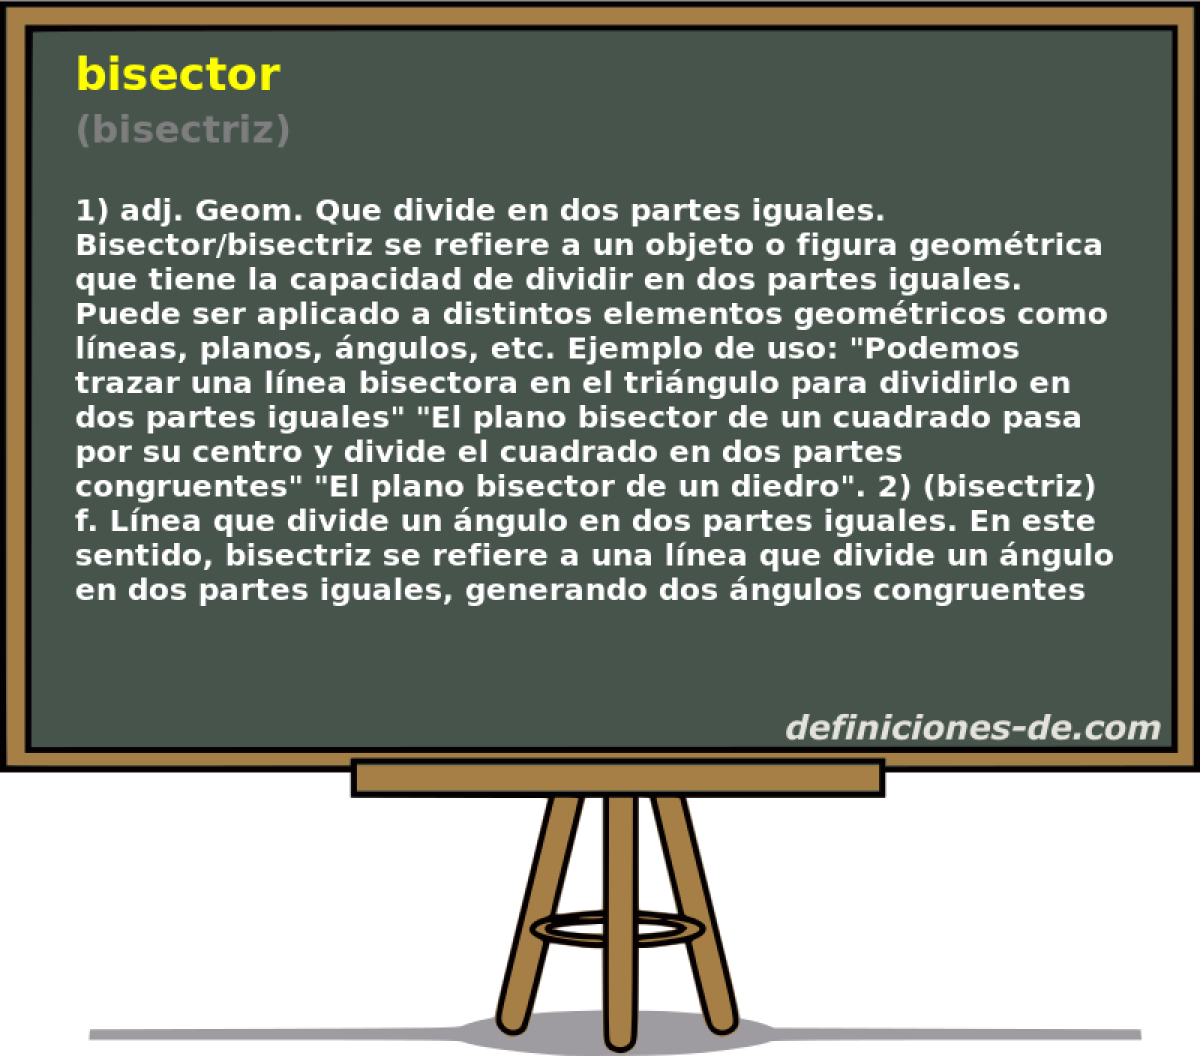 bisector (bisectriz)